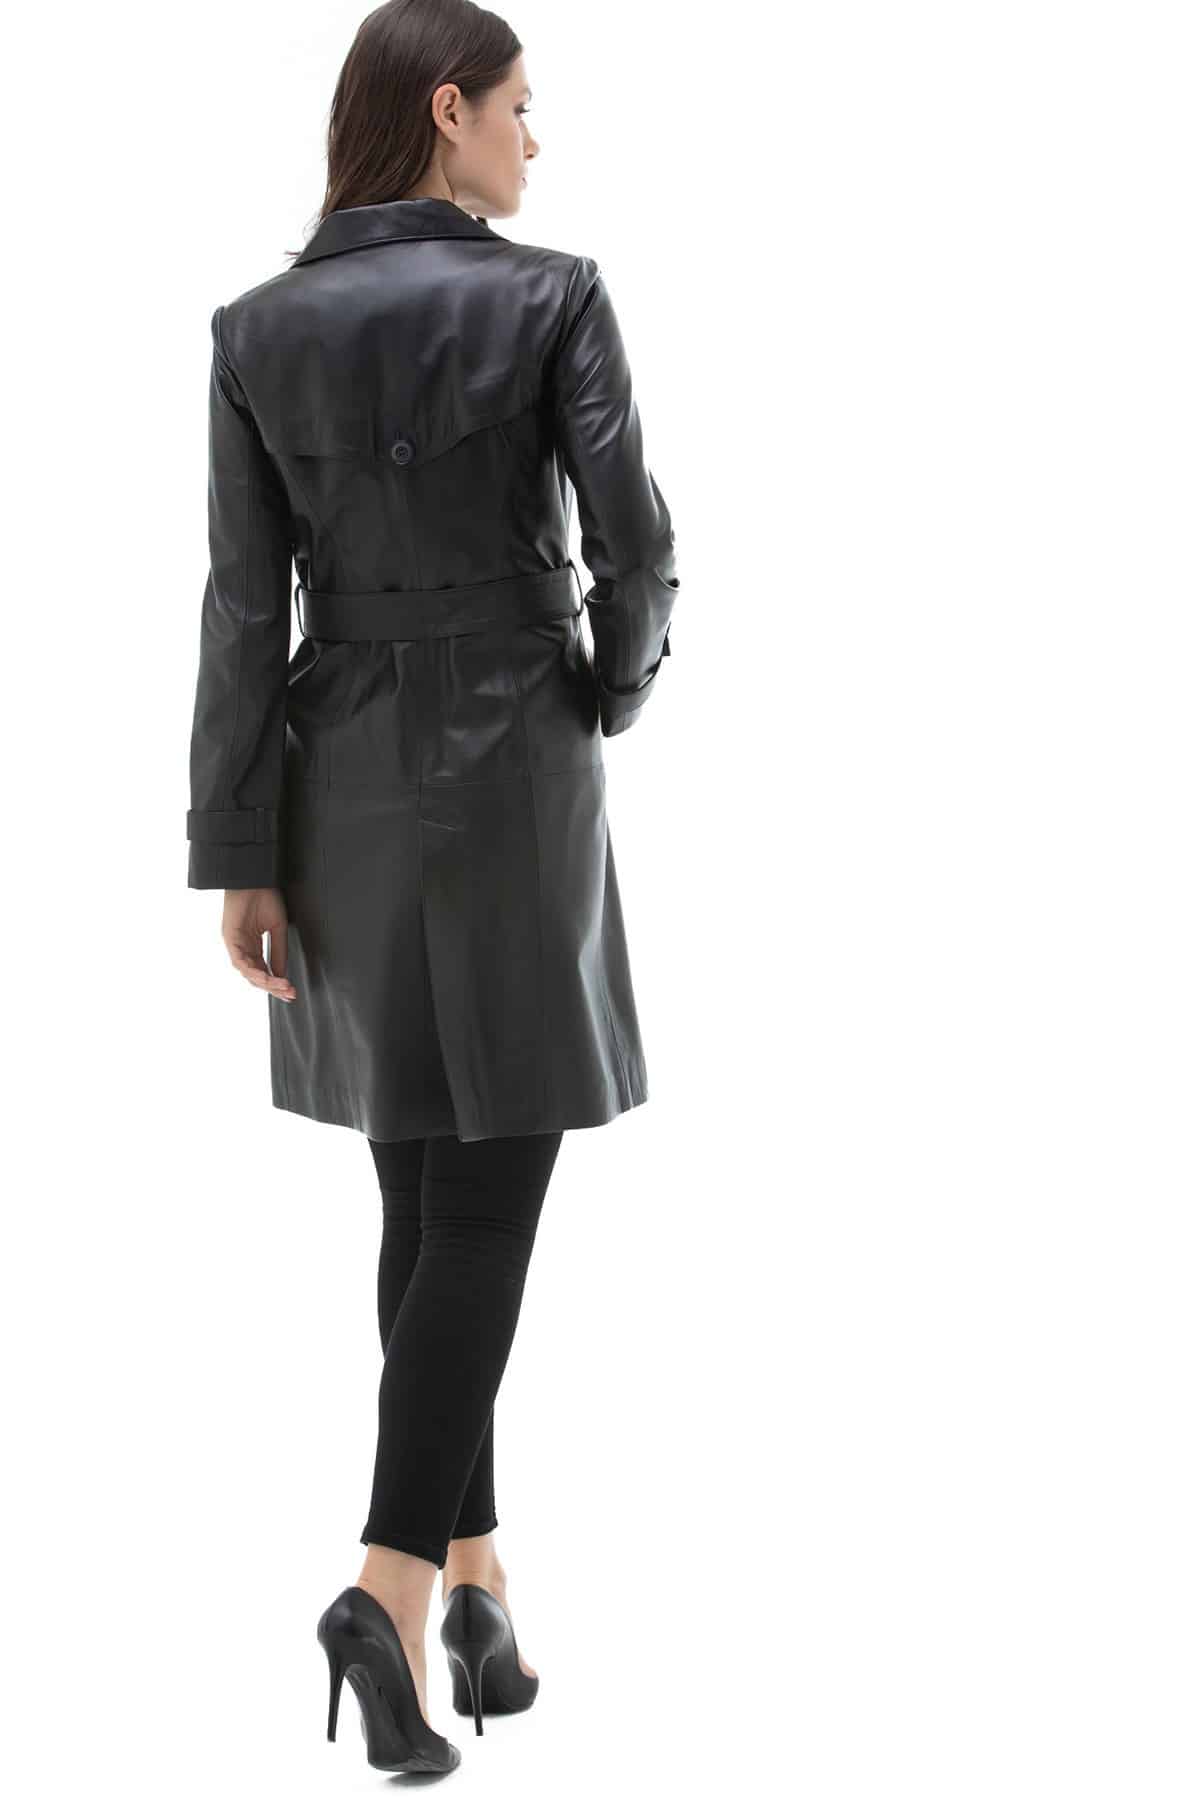 Urban Fashion Studio Blake Leather Black Trench Coat Women